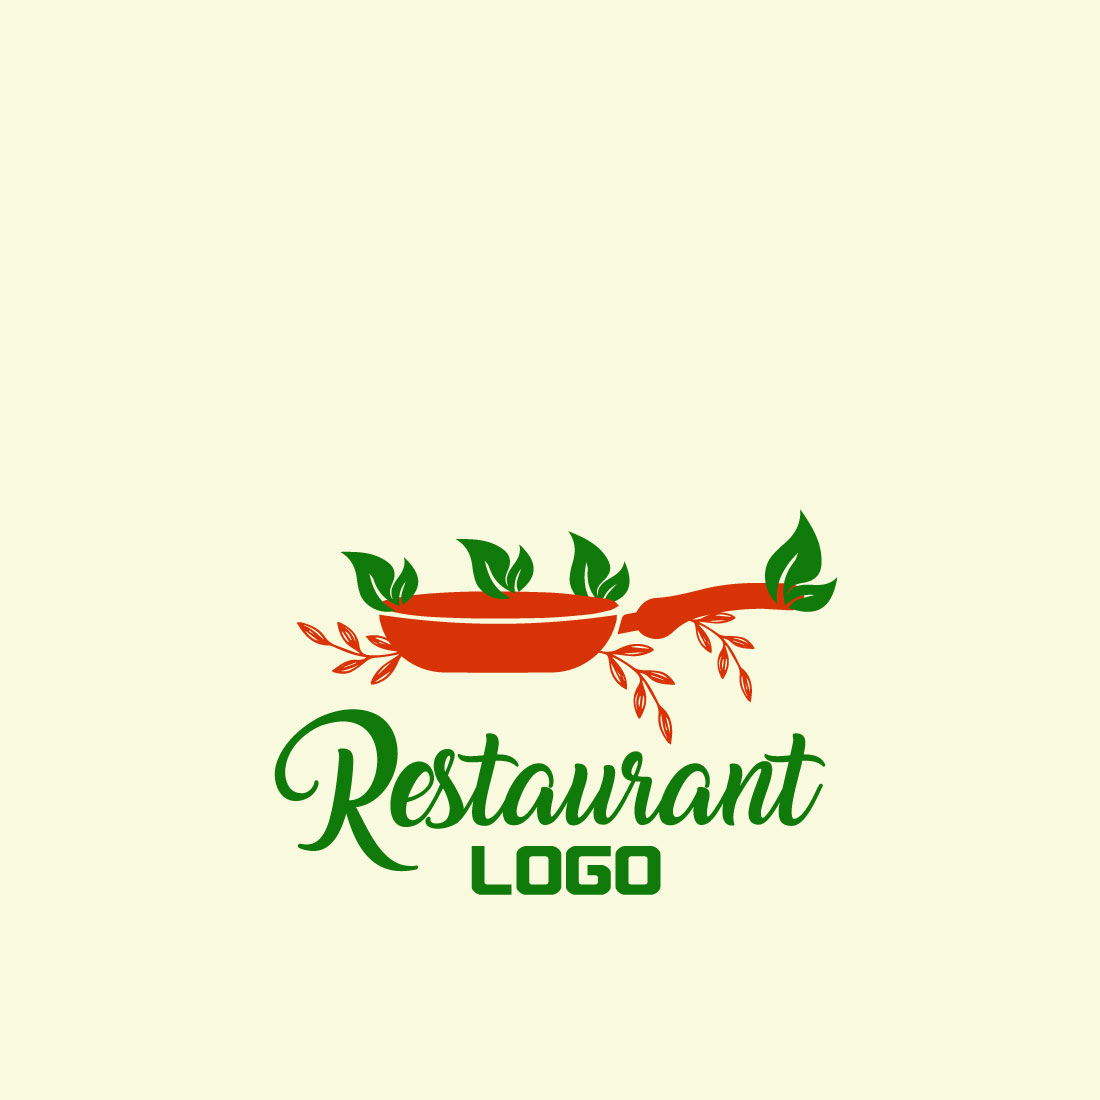 Free Restaurant Logo cover image.